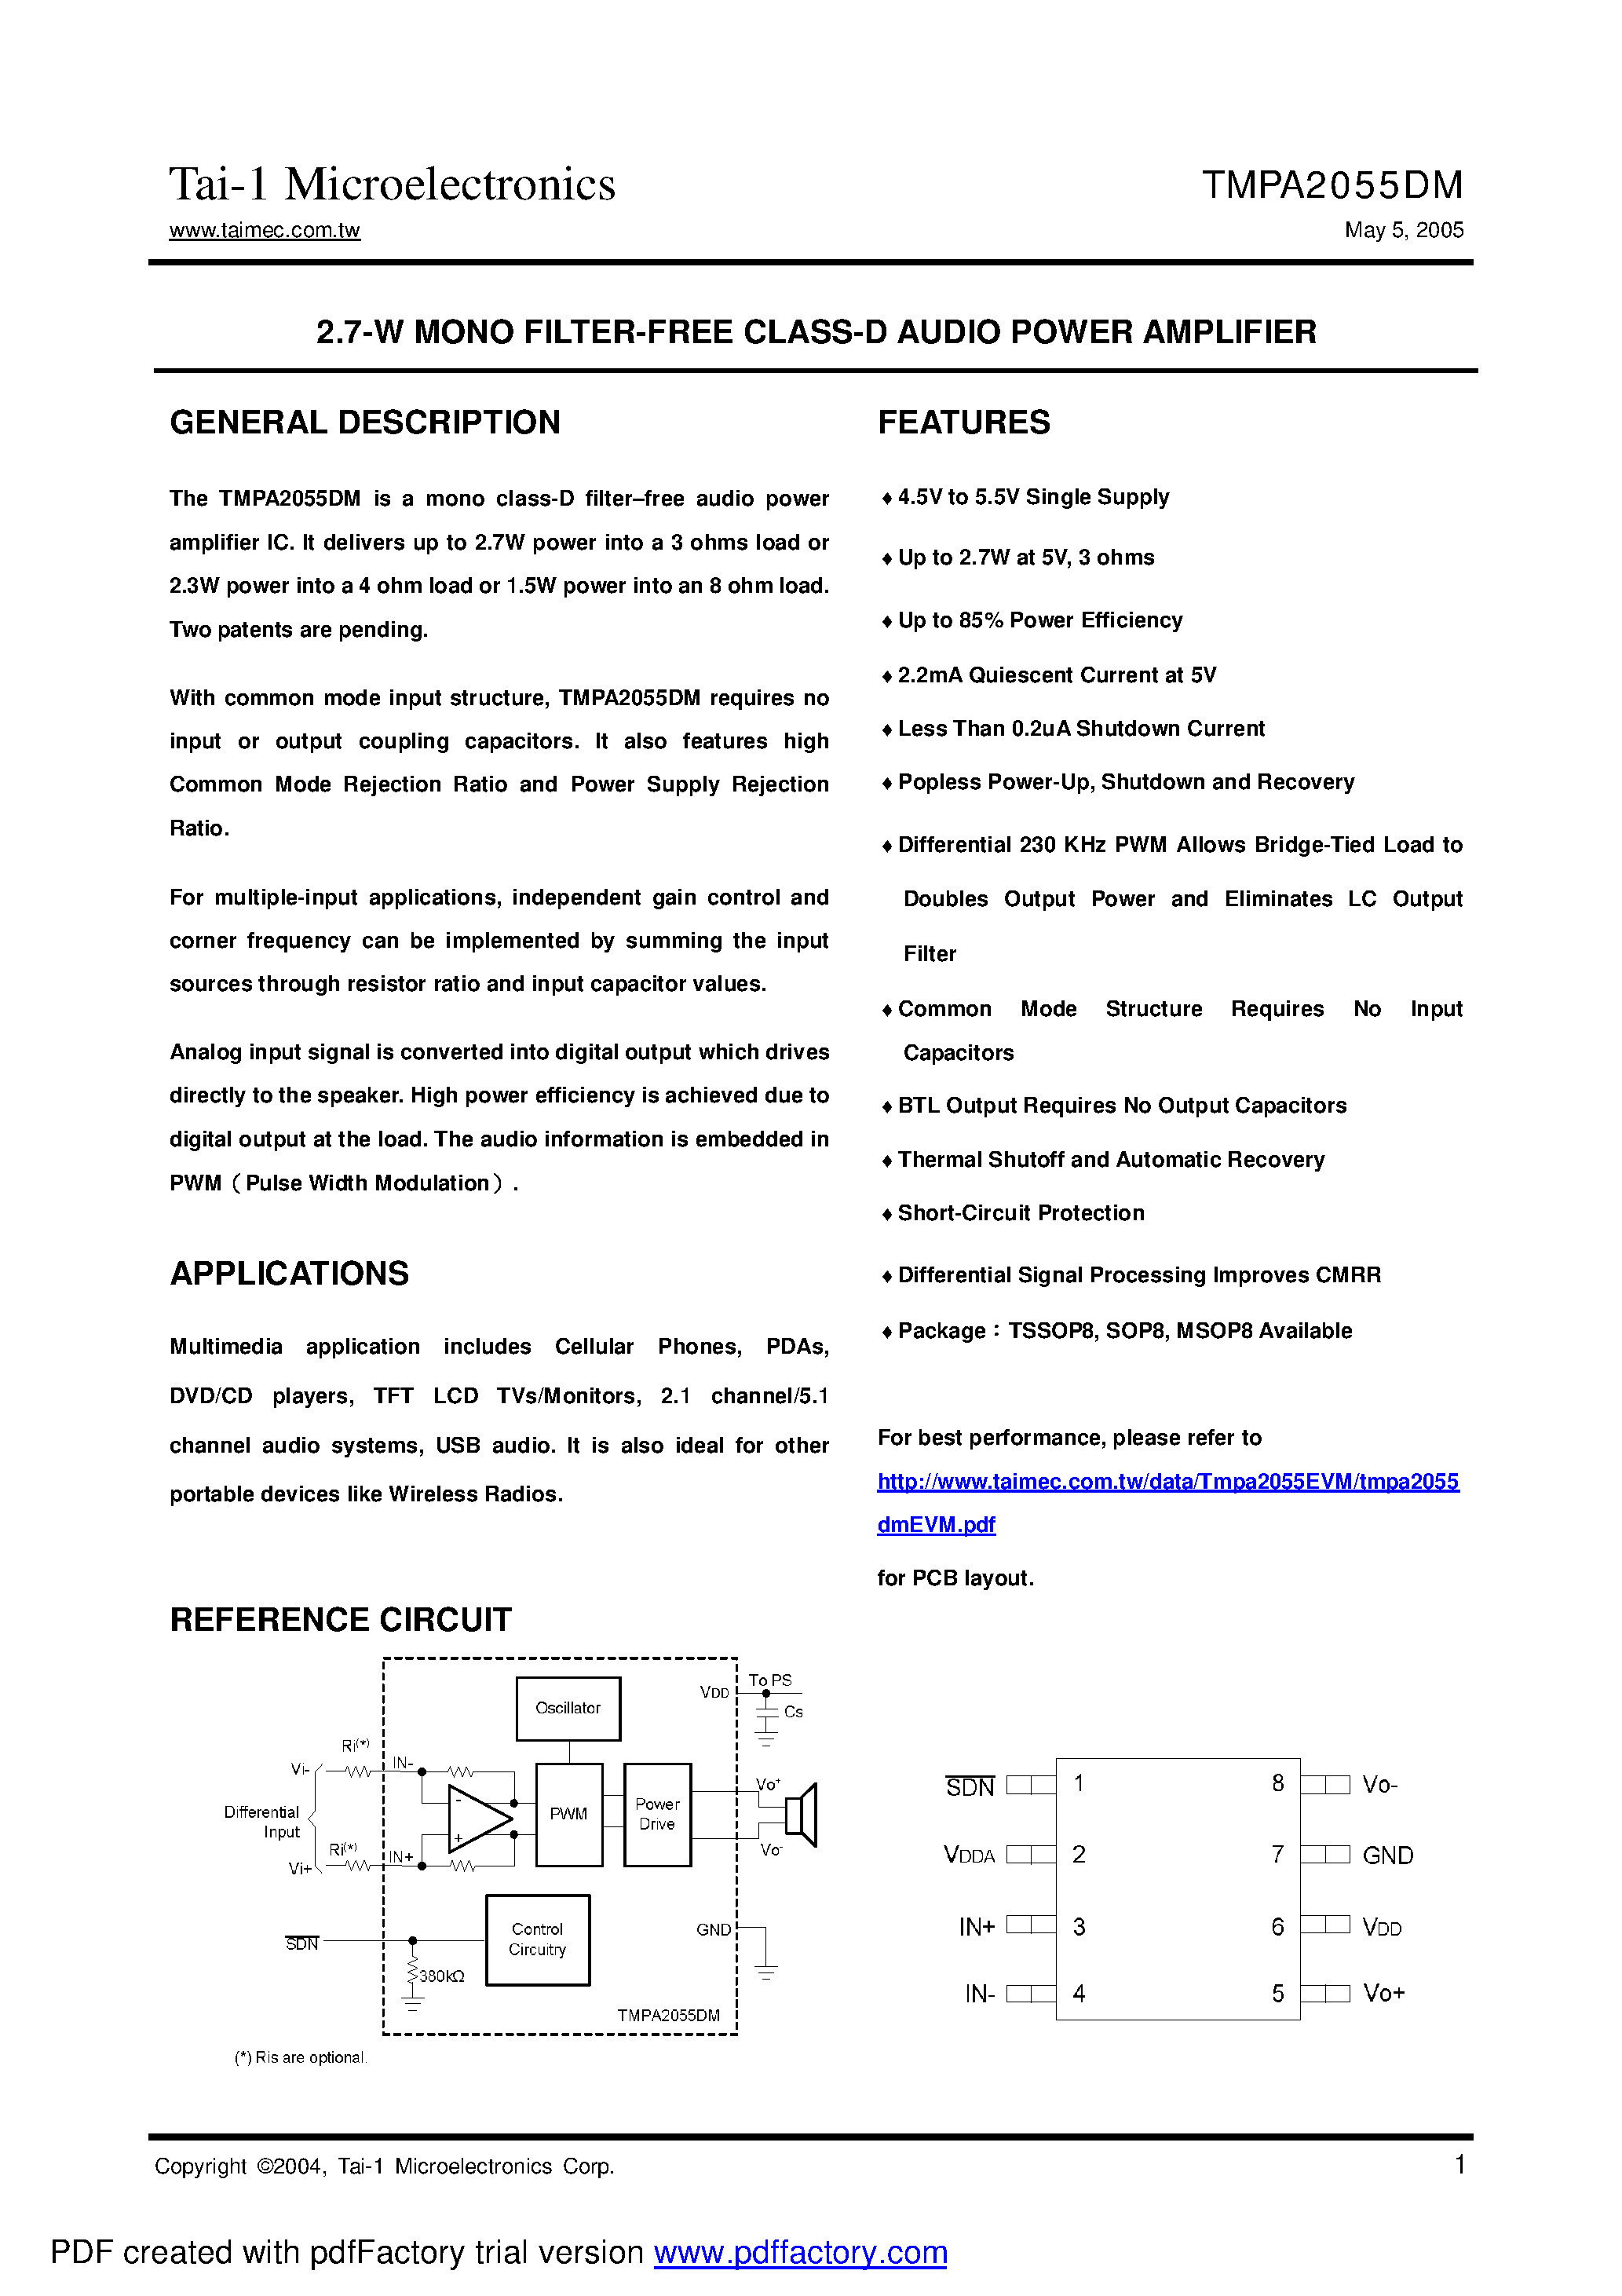 Datasheet TMPA2055DM - 2.7-W MONO FILTER-FREE CLASS-D AUDIO POWER AMPLIFIER page 1